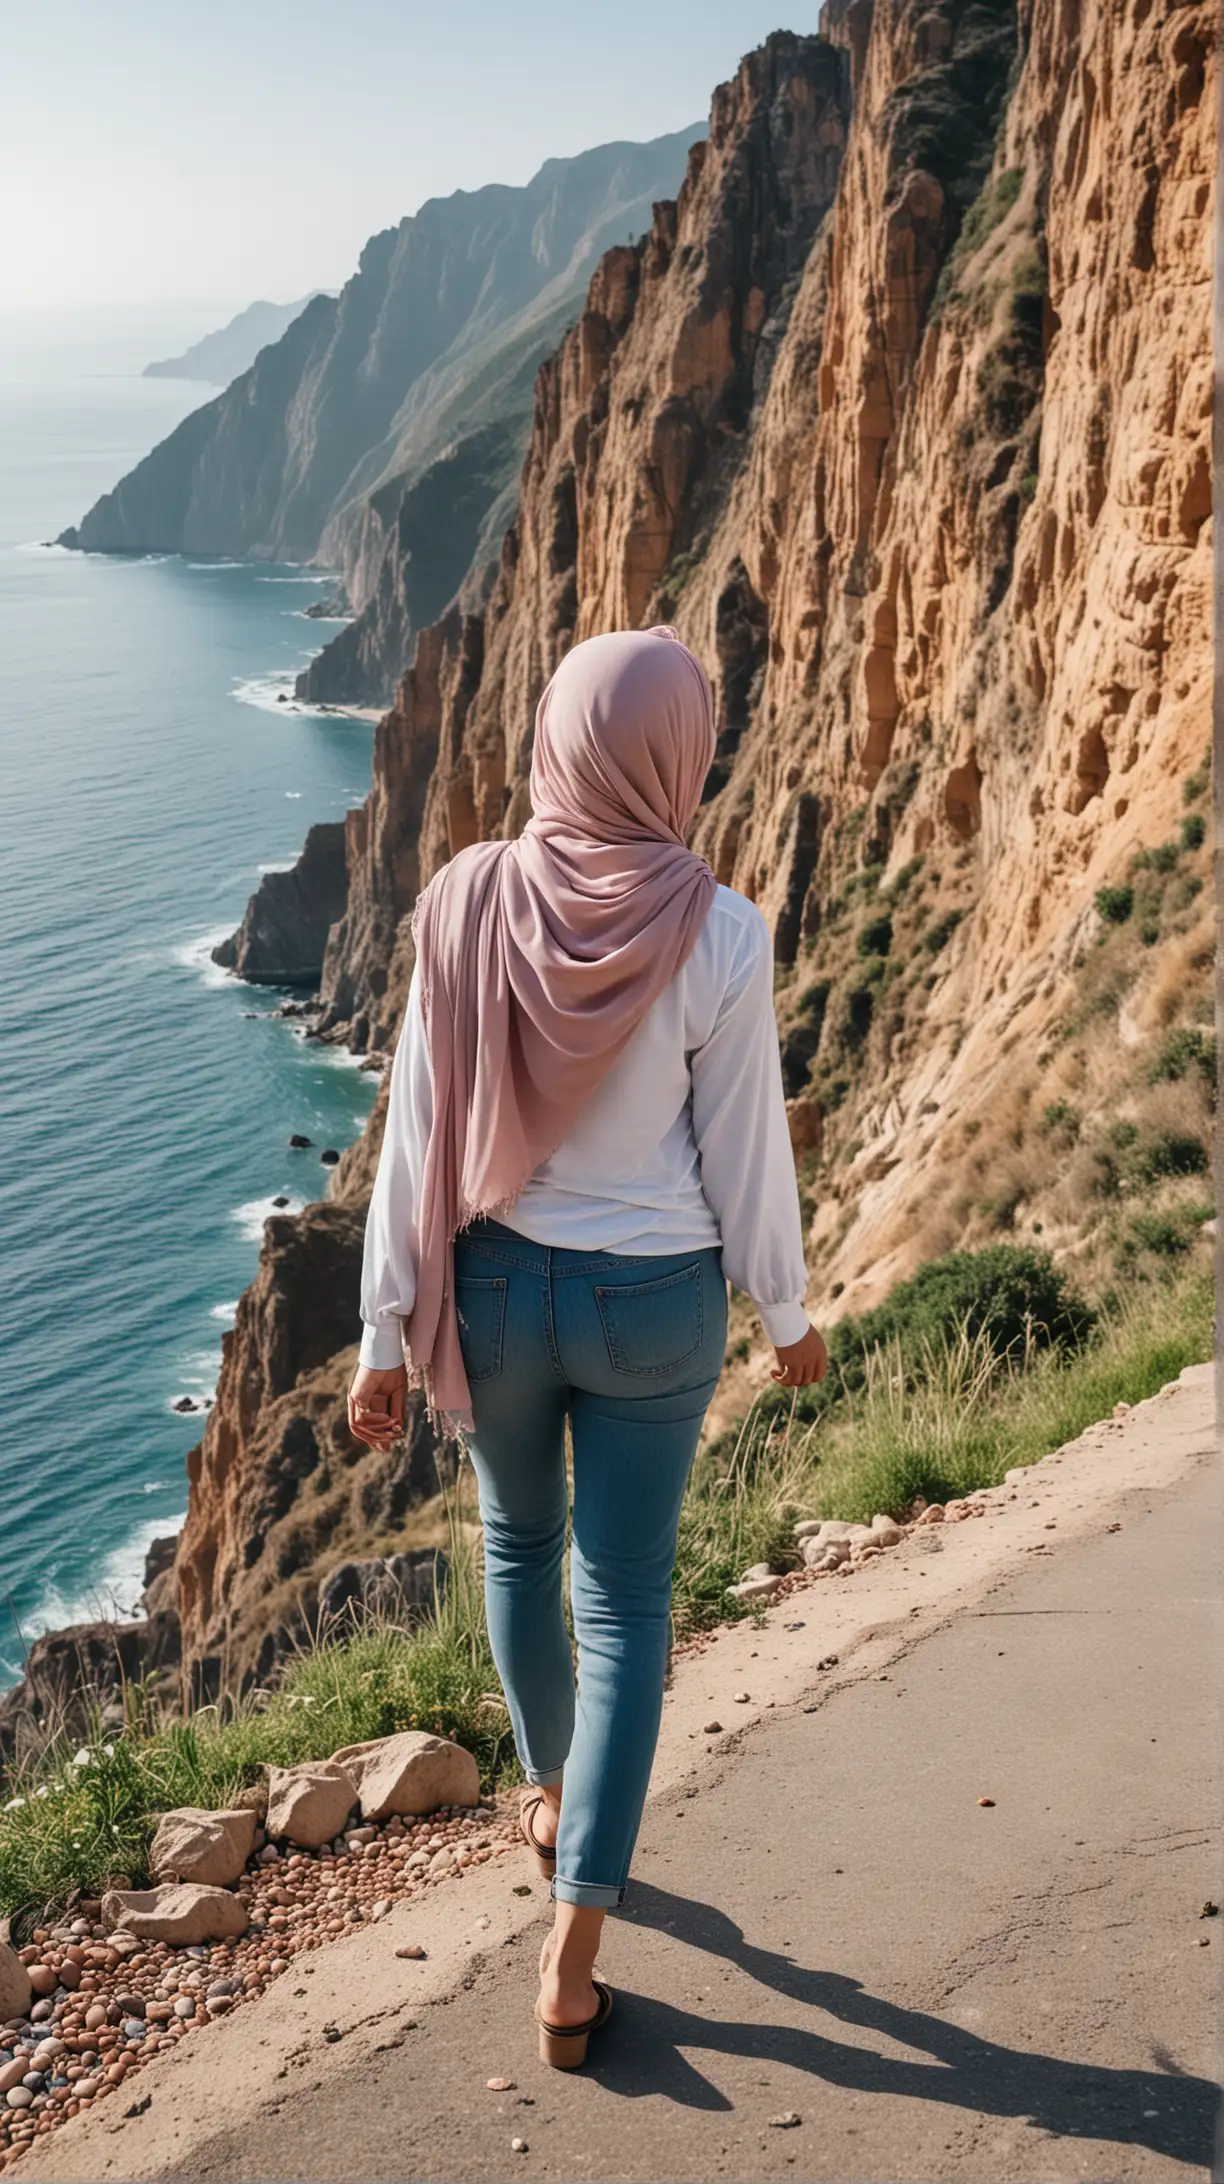 Wanita cantik behijab bercela jeans sesnag berjalan di tepi jalan raya ditepi gunung dan tebing. Tampak pemndangan laut yamg indah